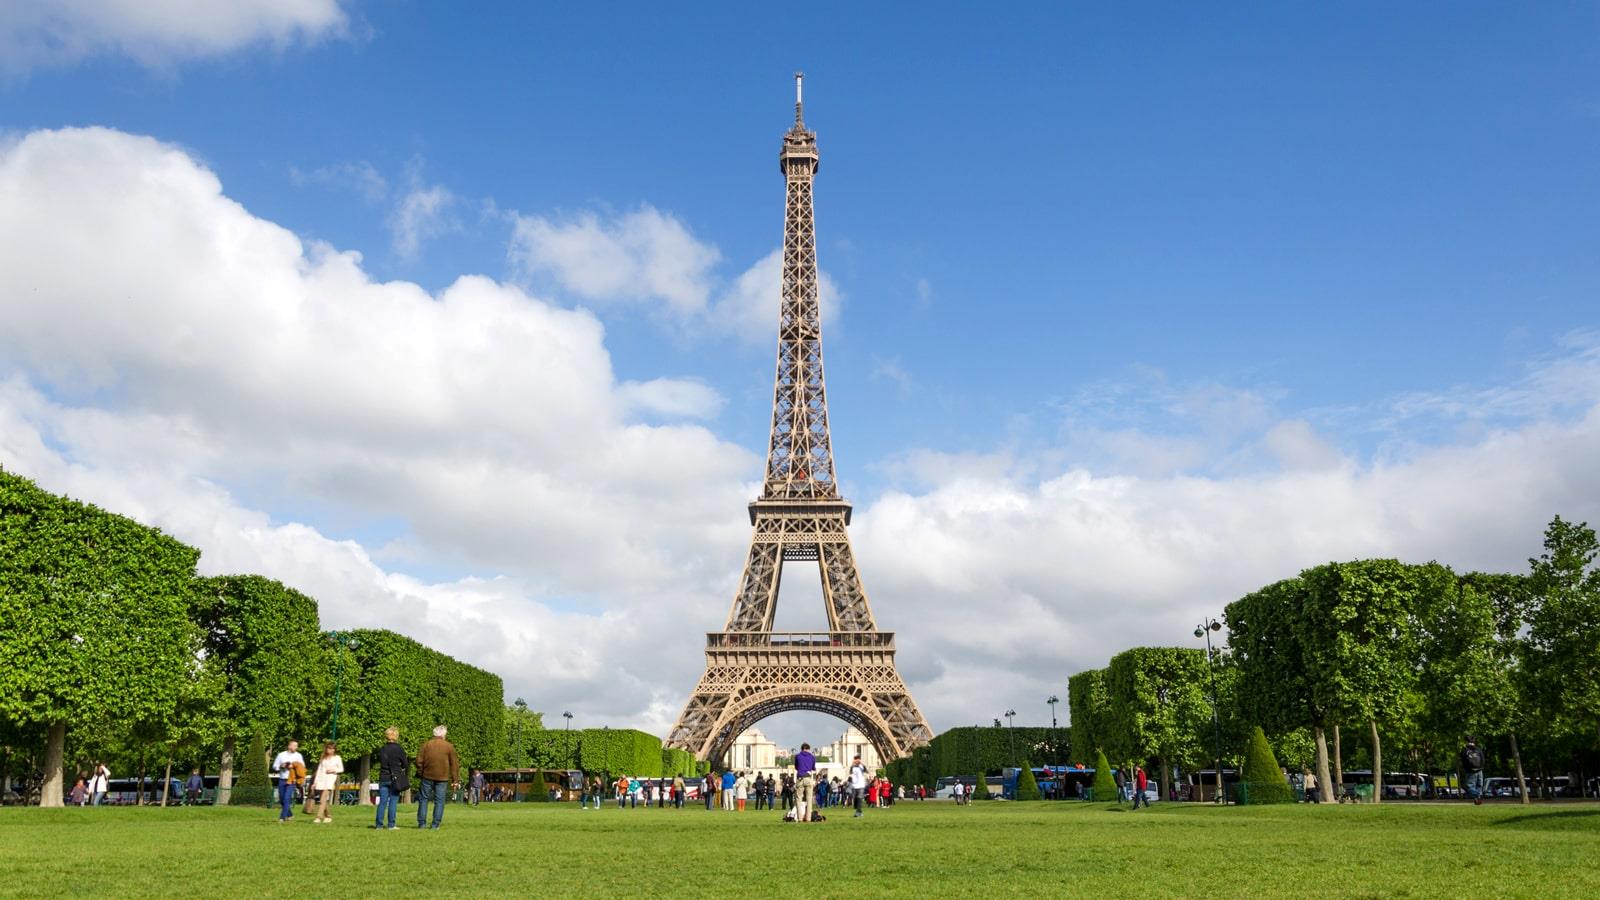 Firkantet klippede træer i alléen ned mod Eiffeltårnet